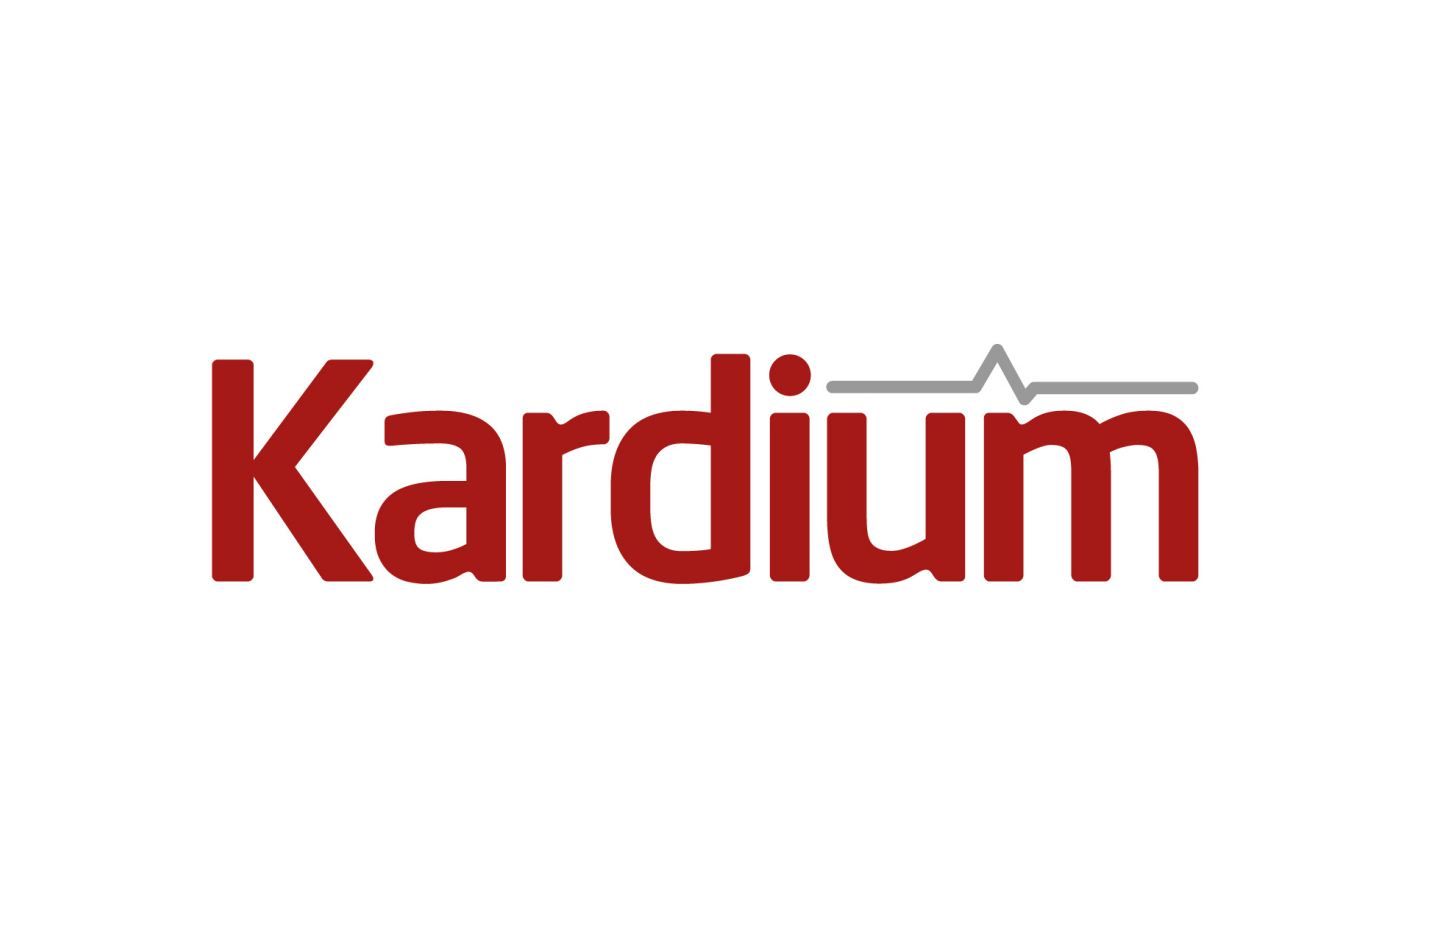 Kardium